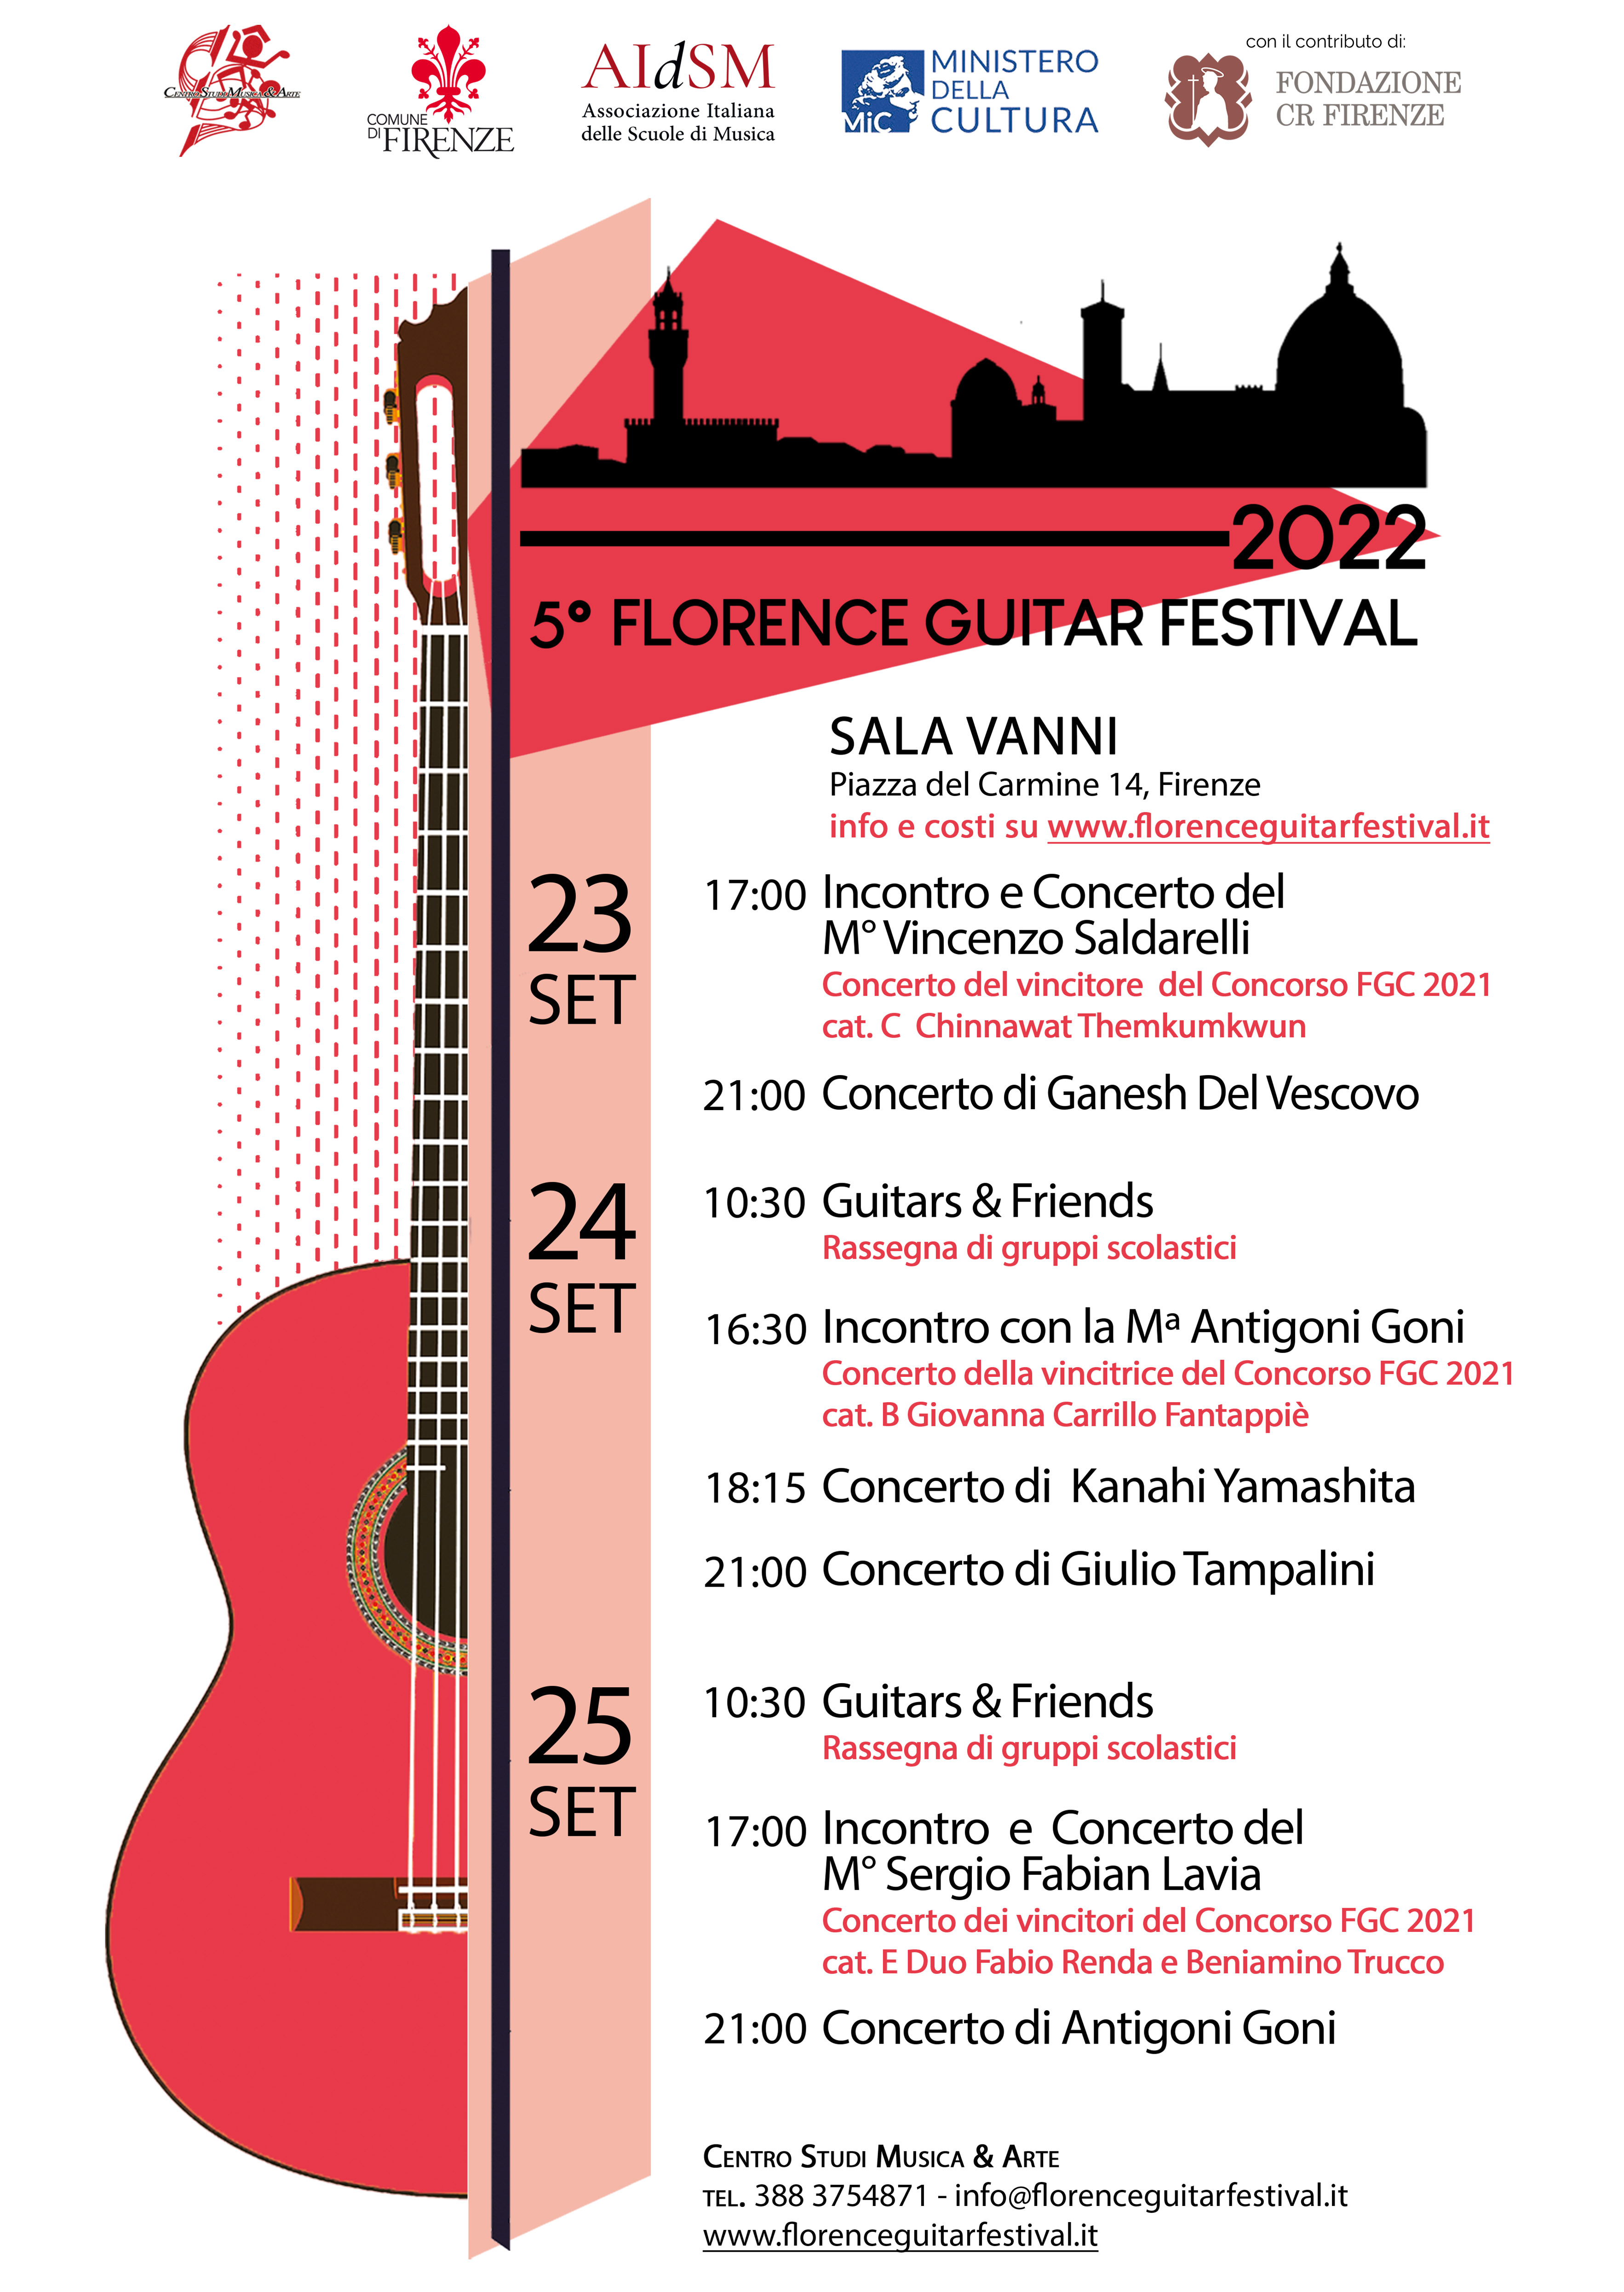 Dal 23 al 25 settembre si terrà il 5° Florence Guitar Festival